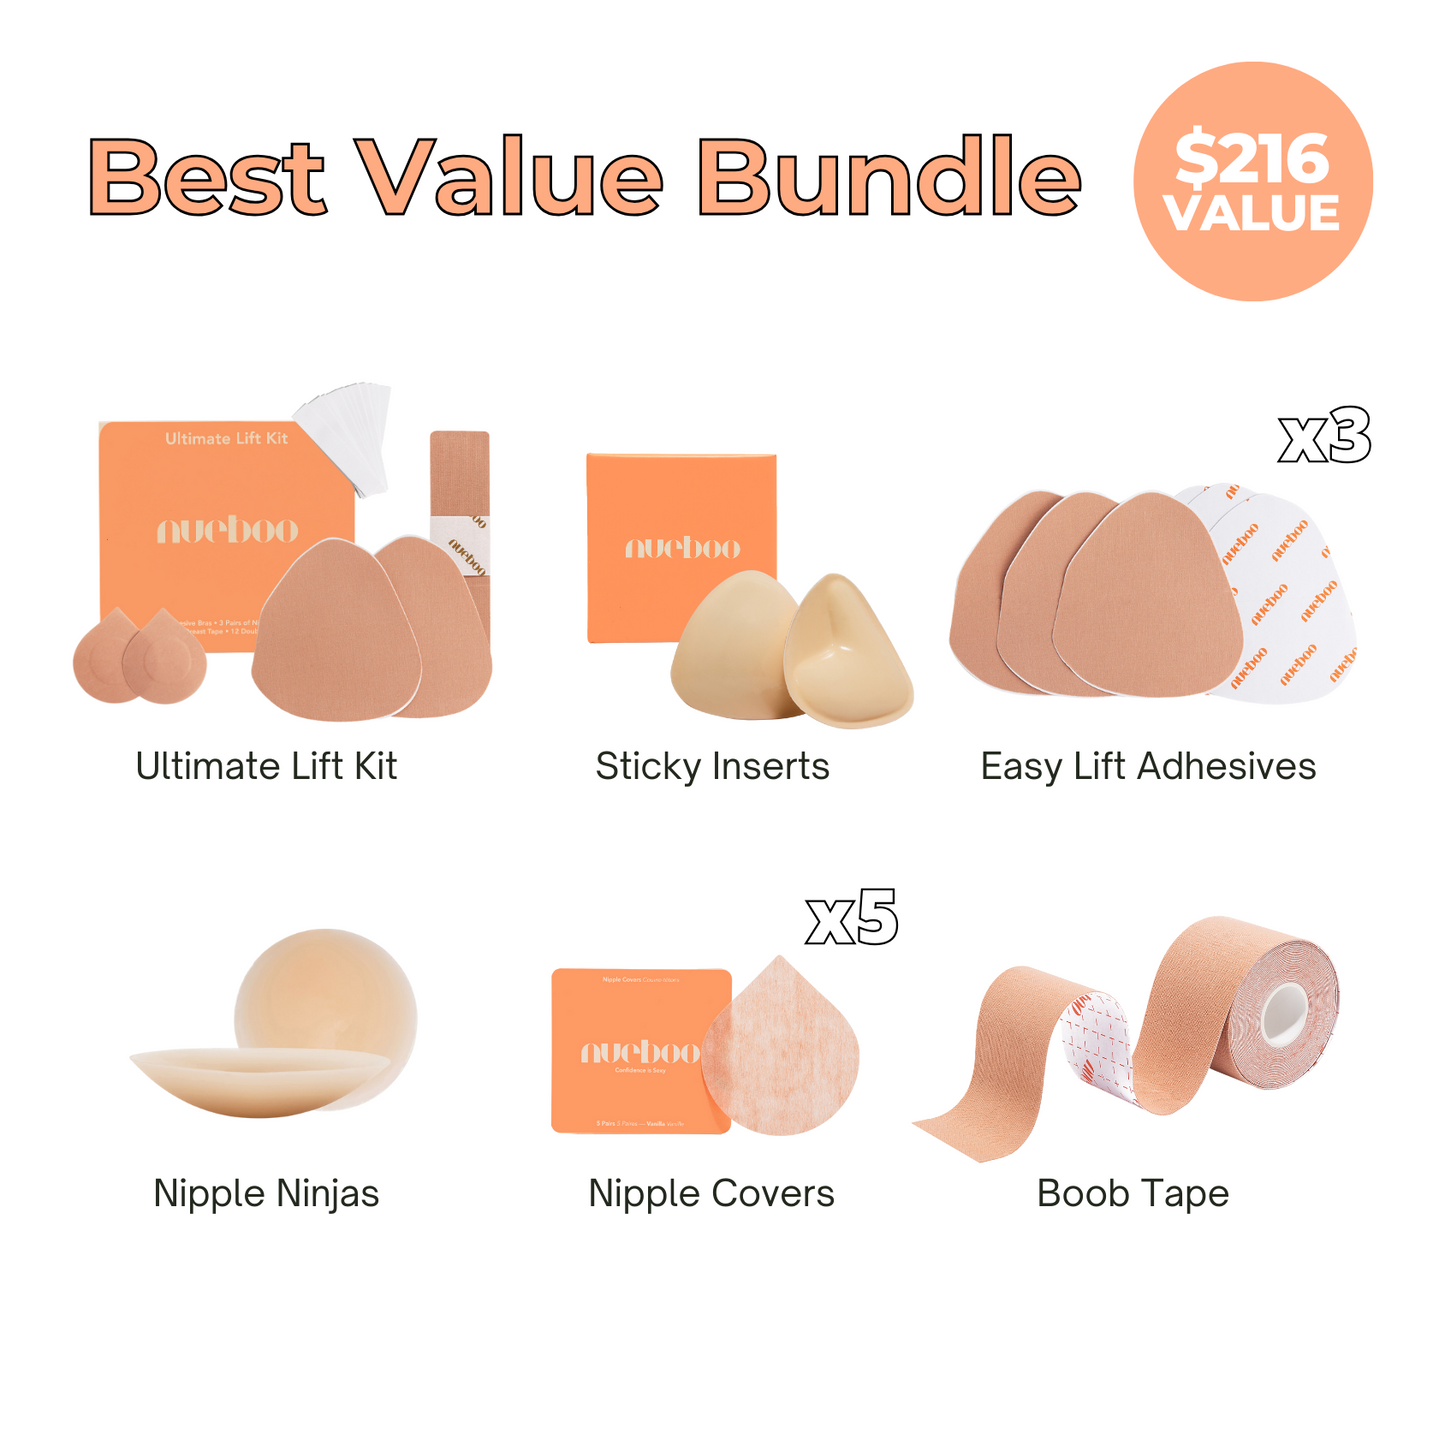 Best Value Bundle – Nueboo India